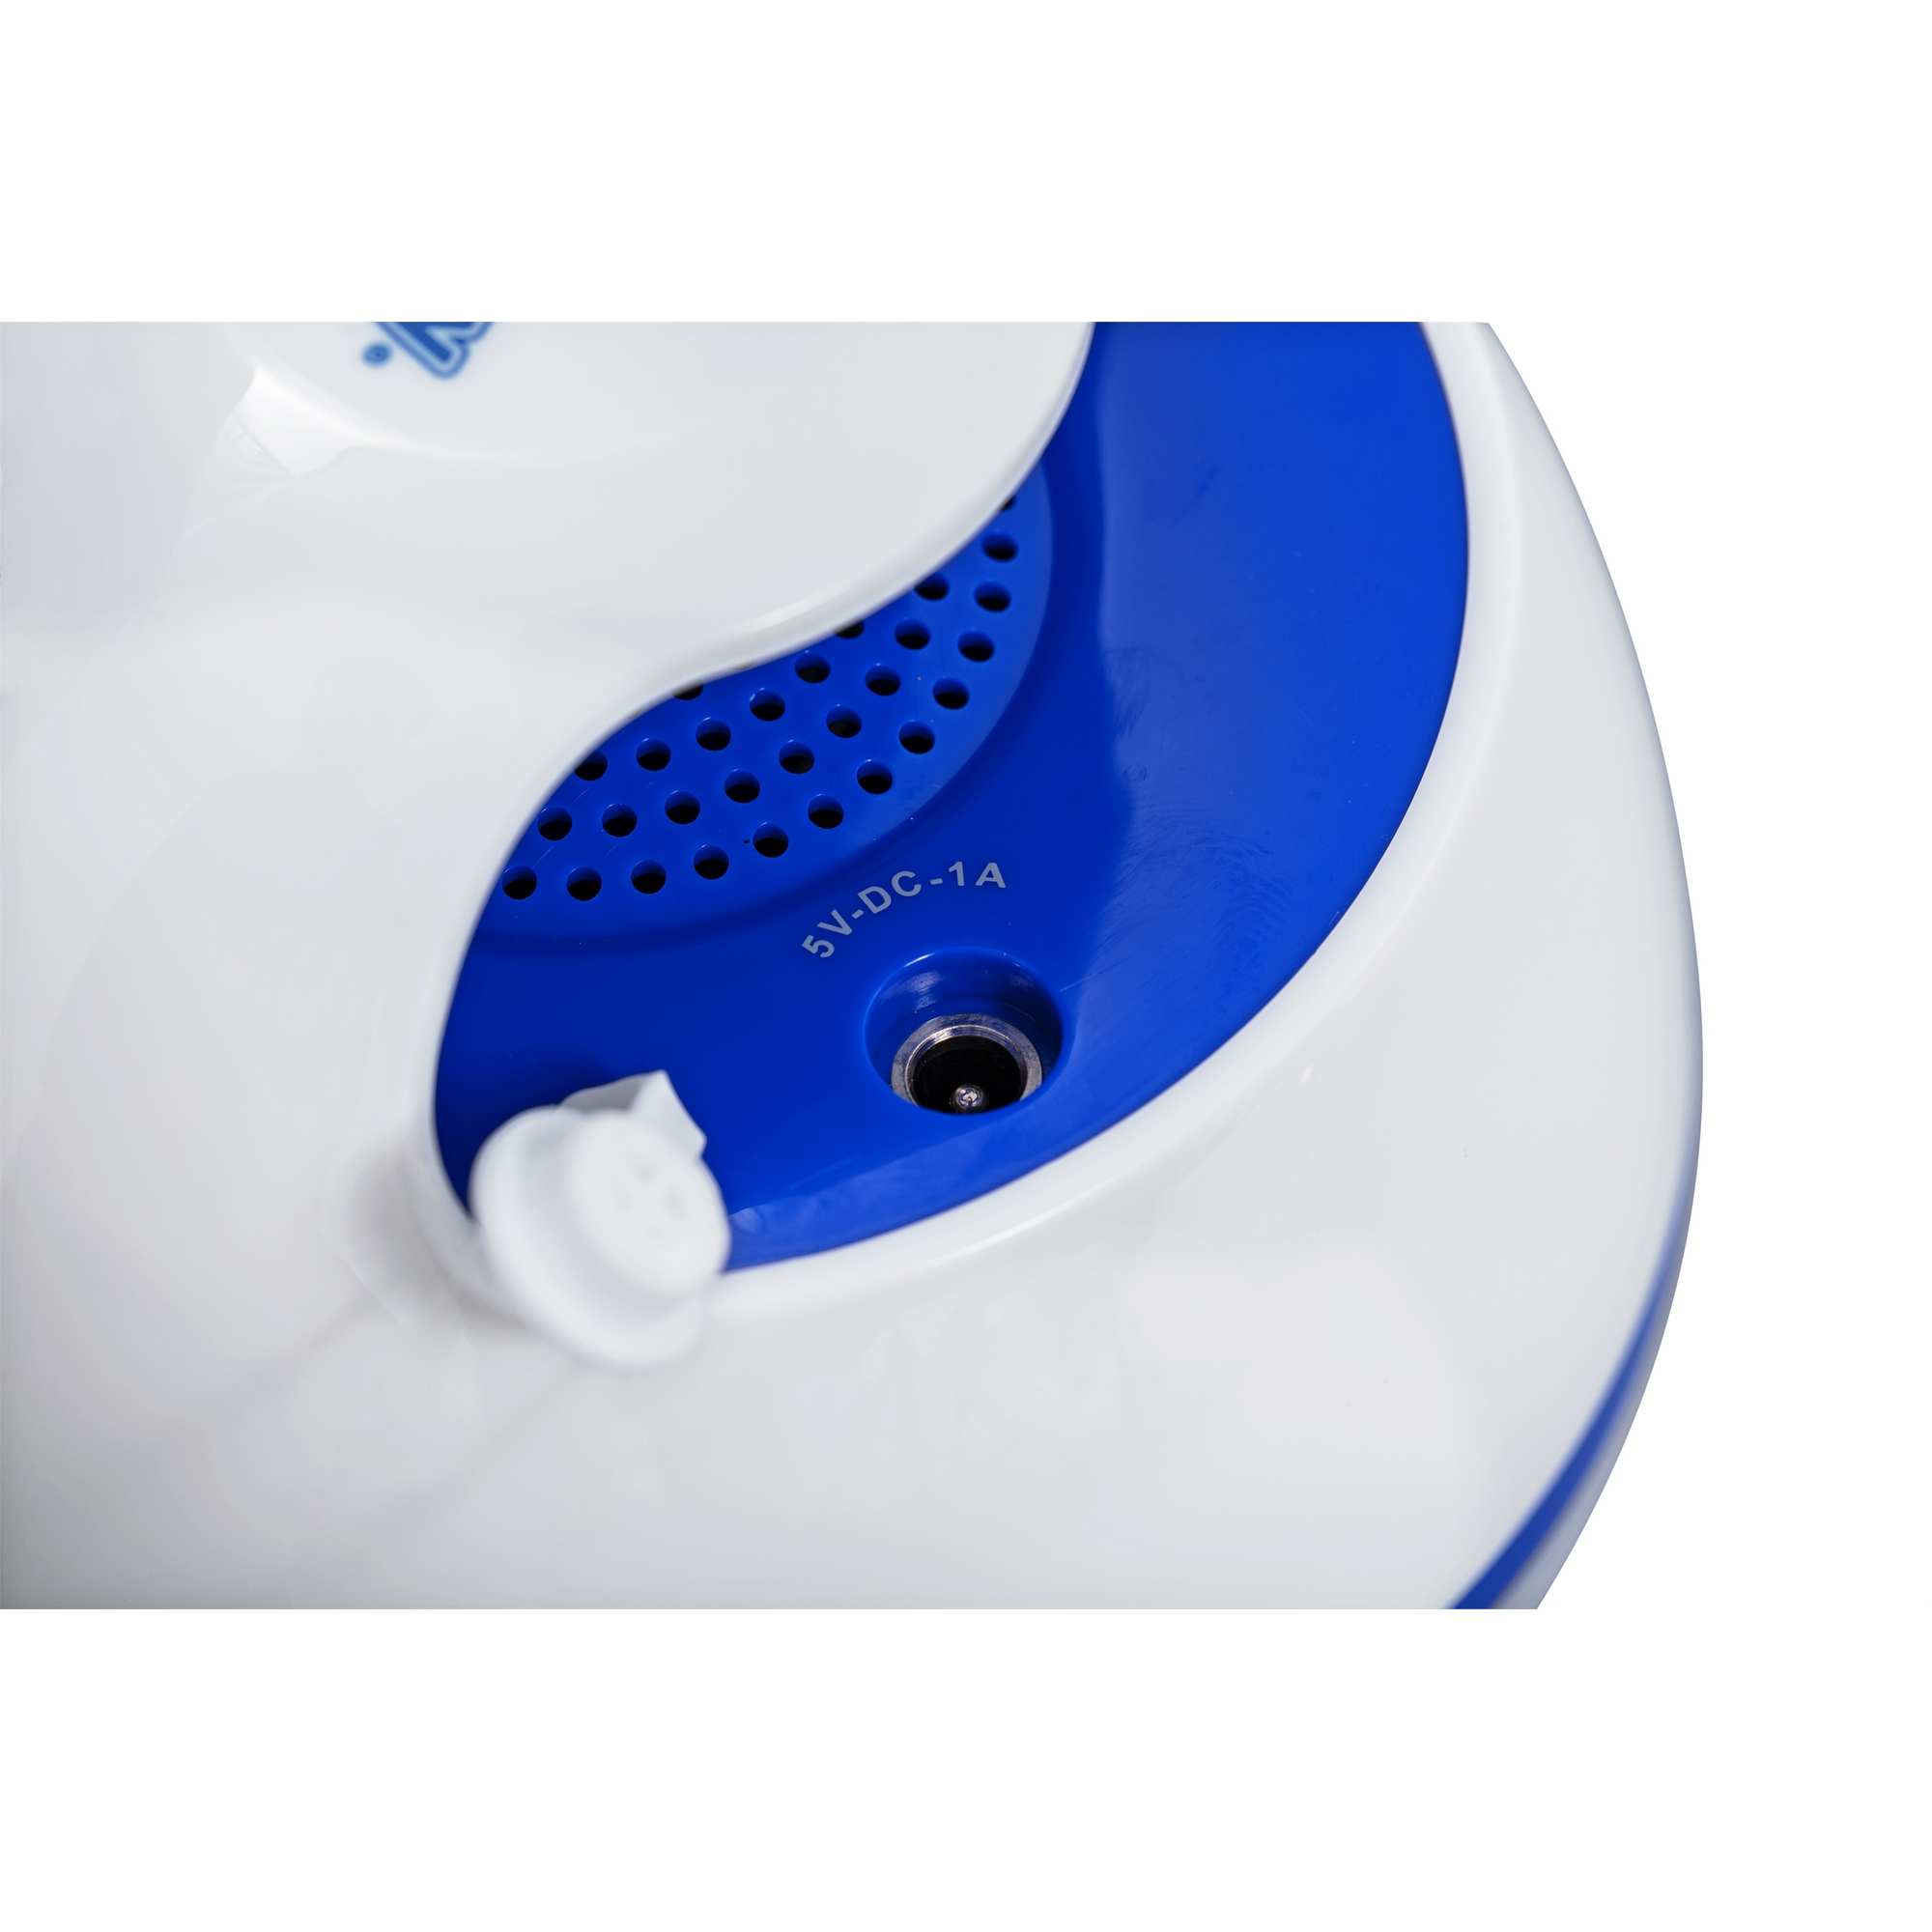 LED-Bluetooth-Lautsprecher 'Flowclear Music Wave' weiß 3,7 V wasserfest + product picture